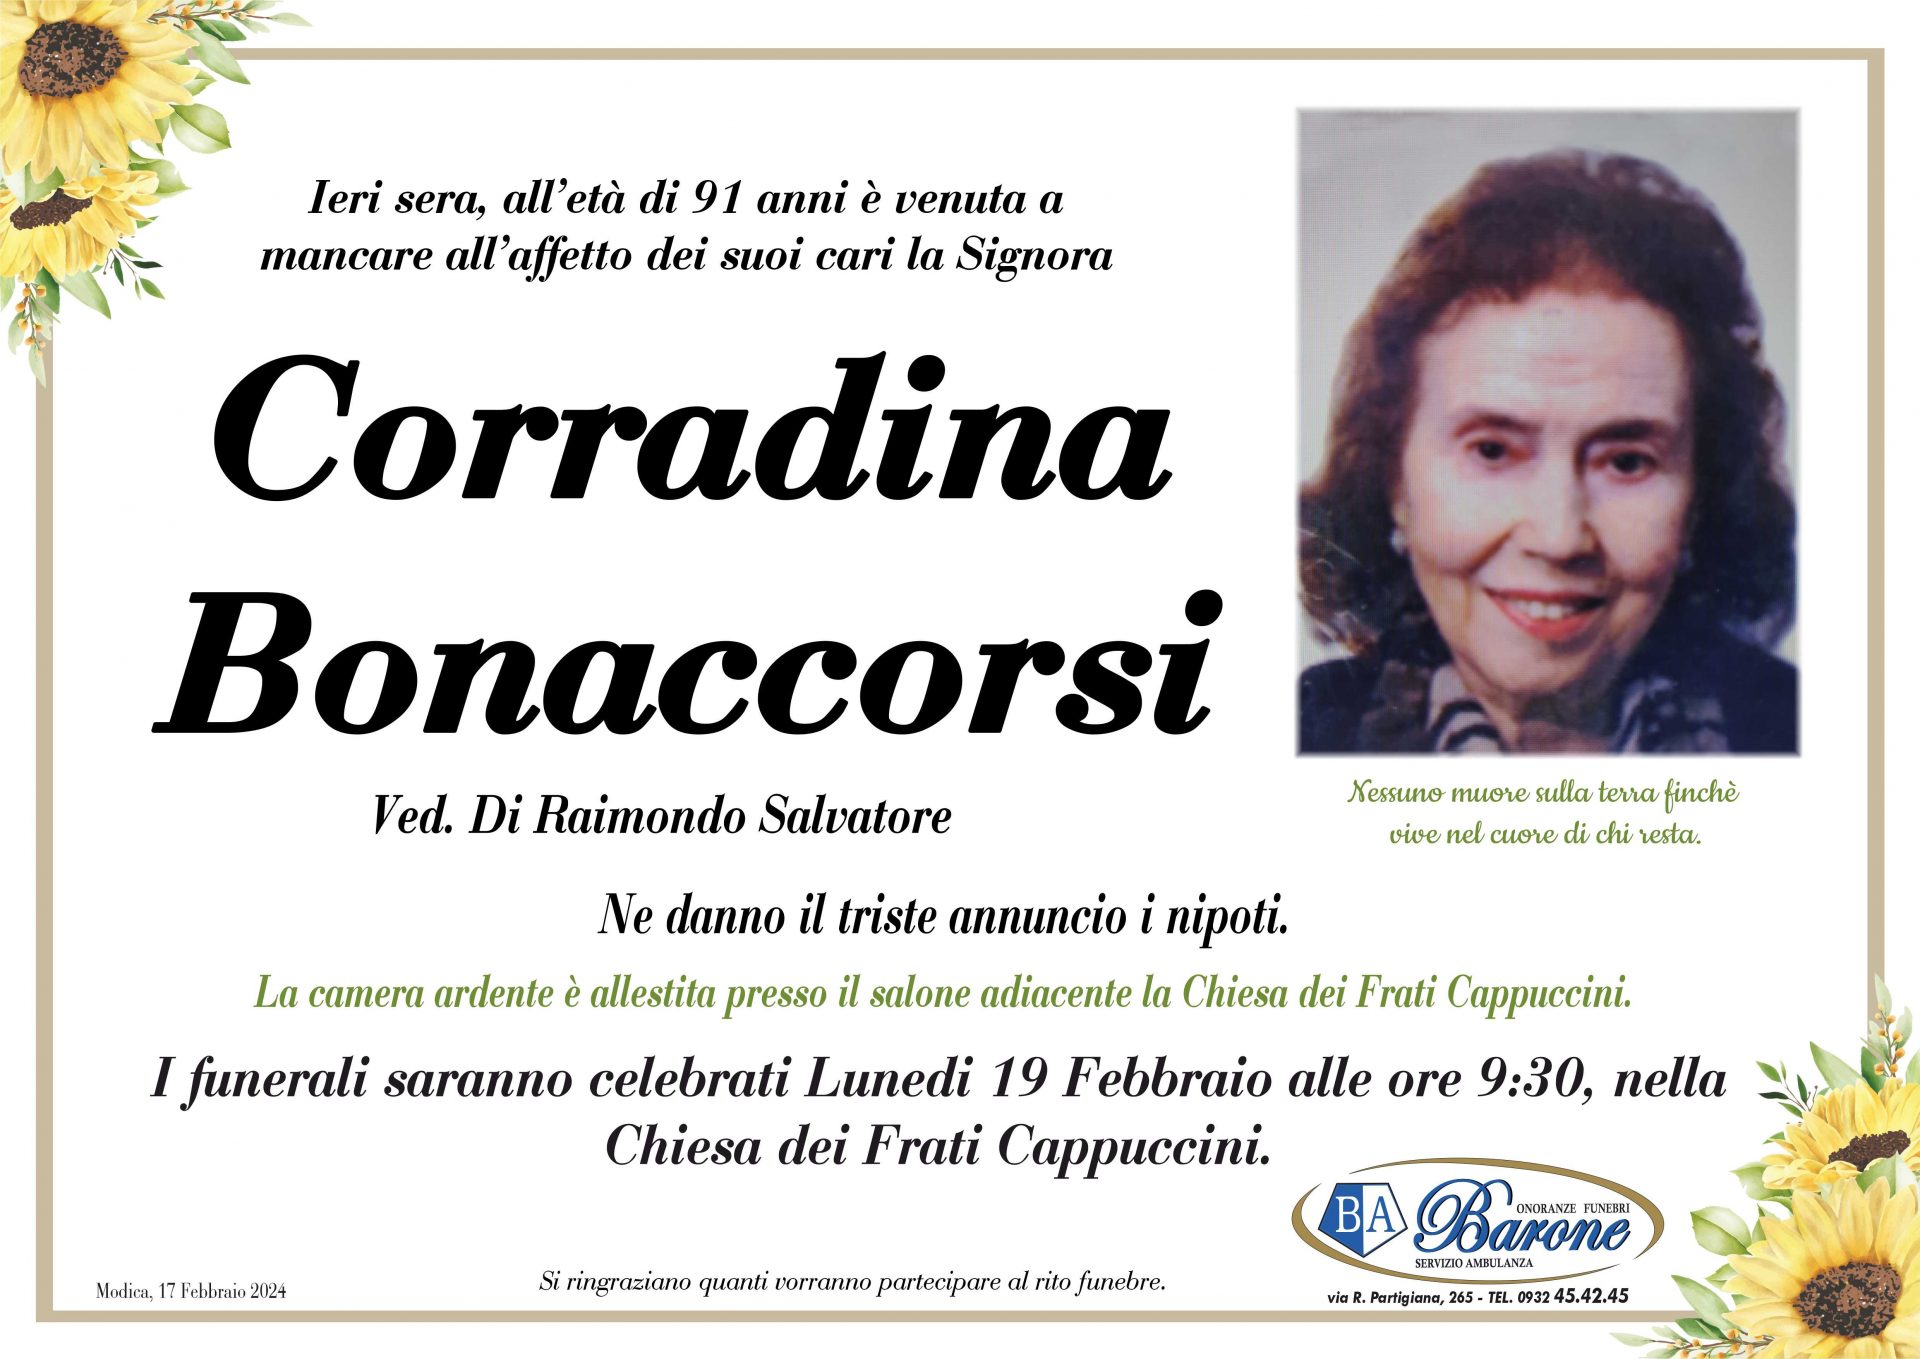 Corradina Bonaccorsi